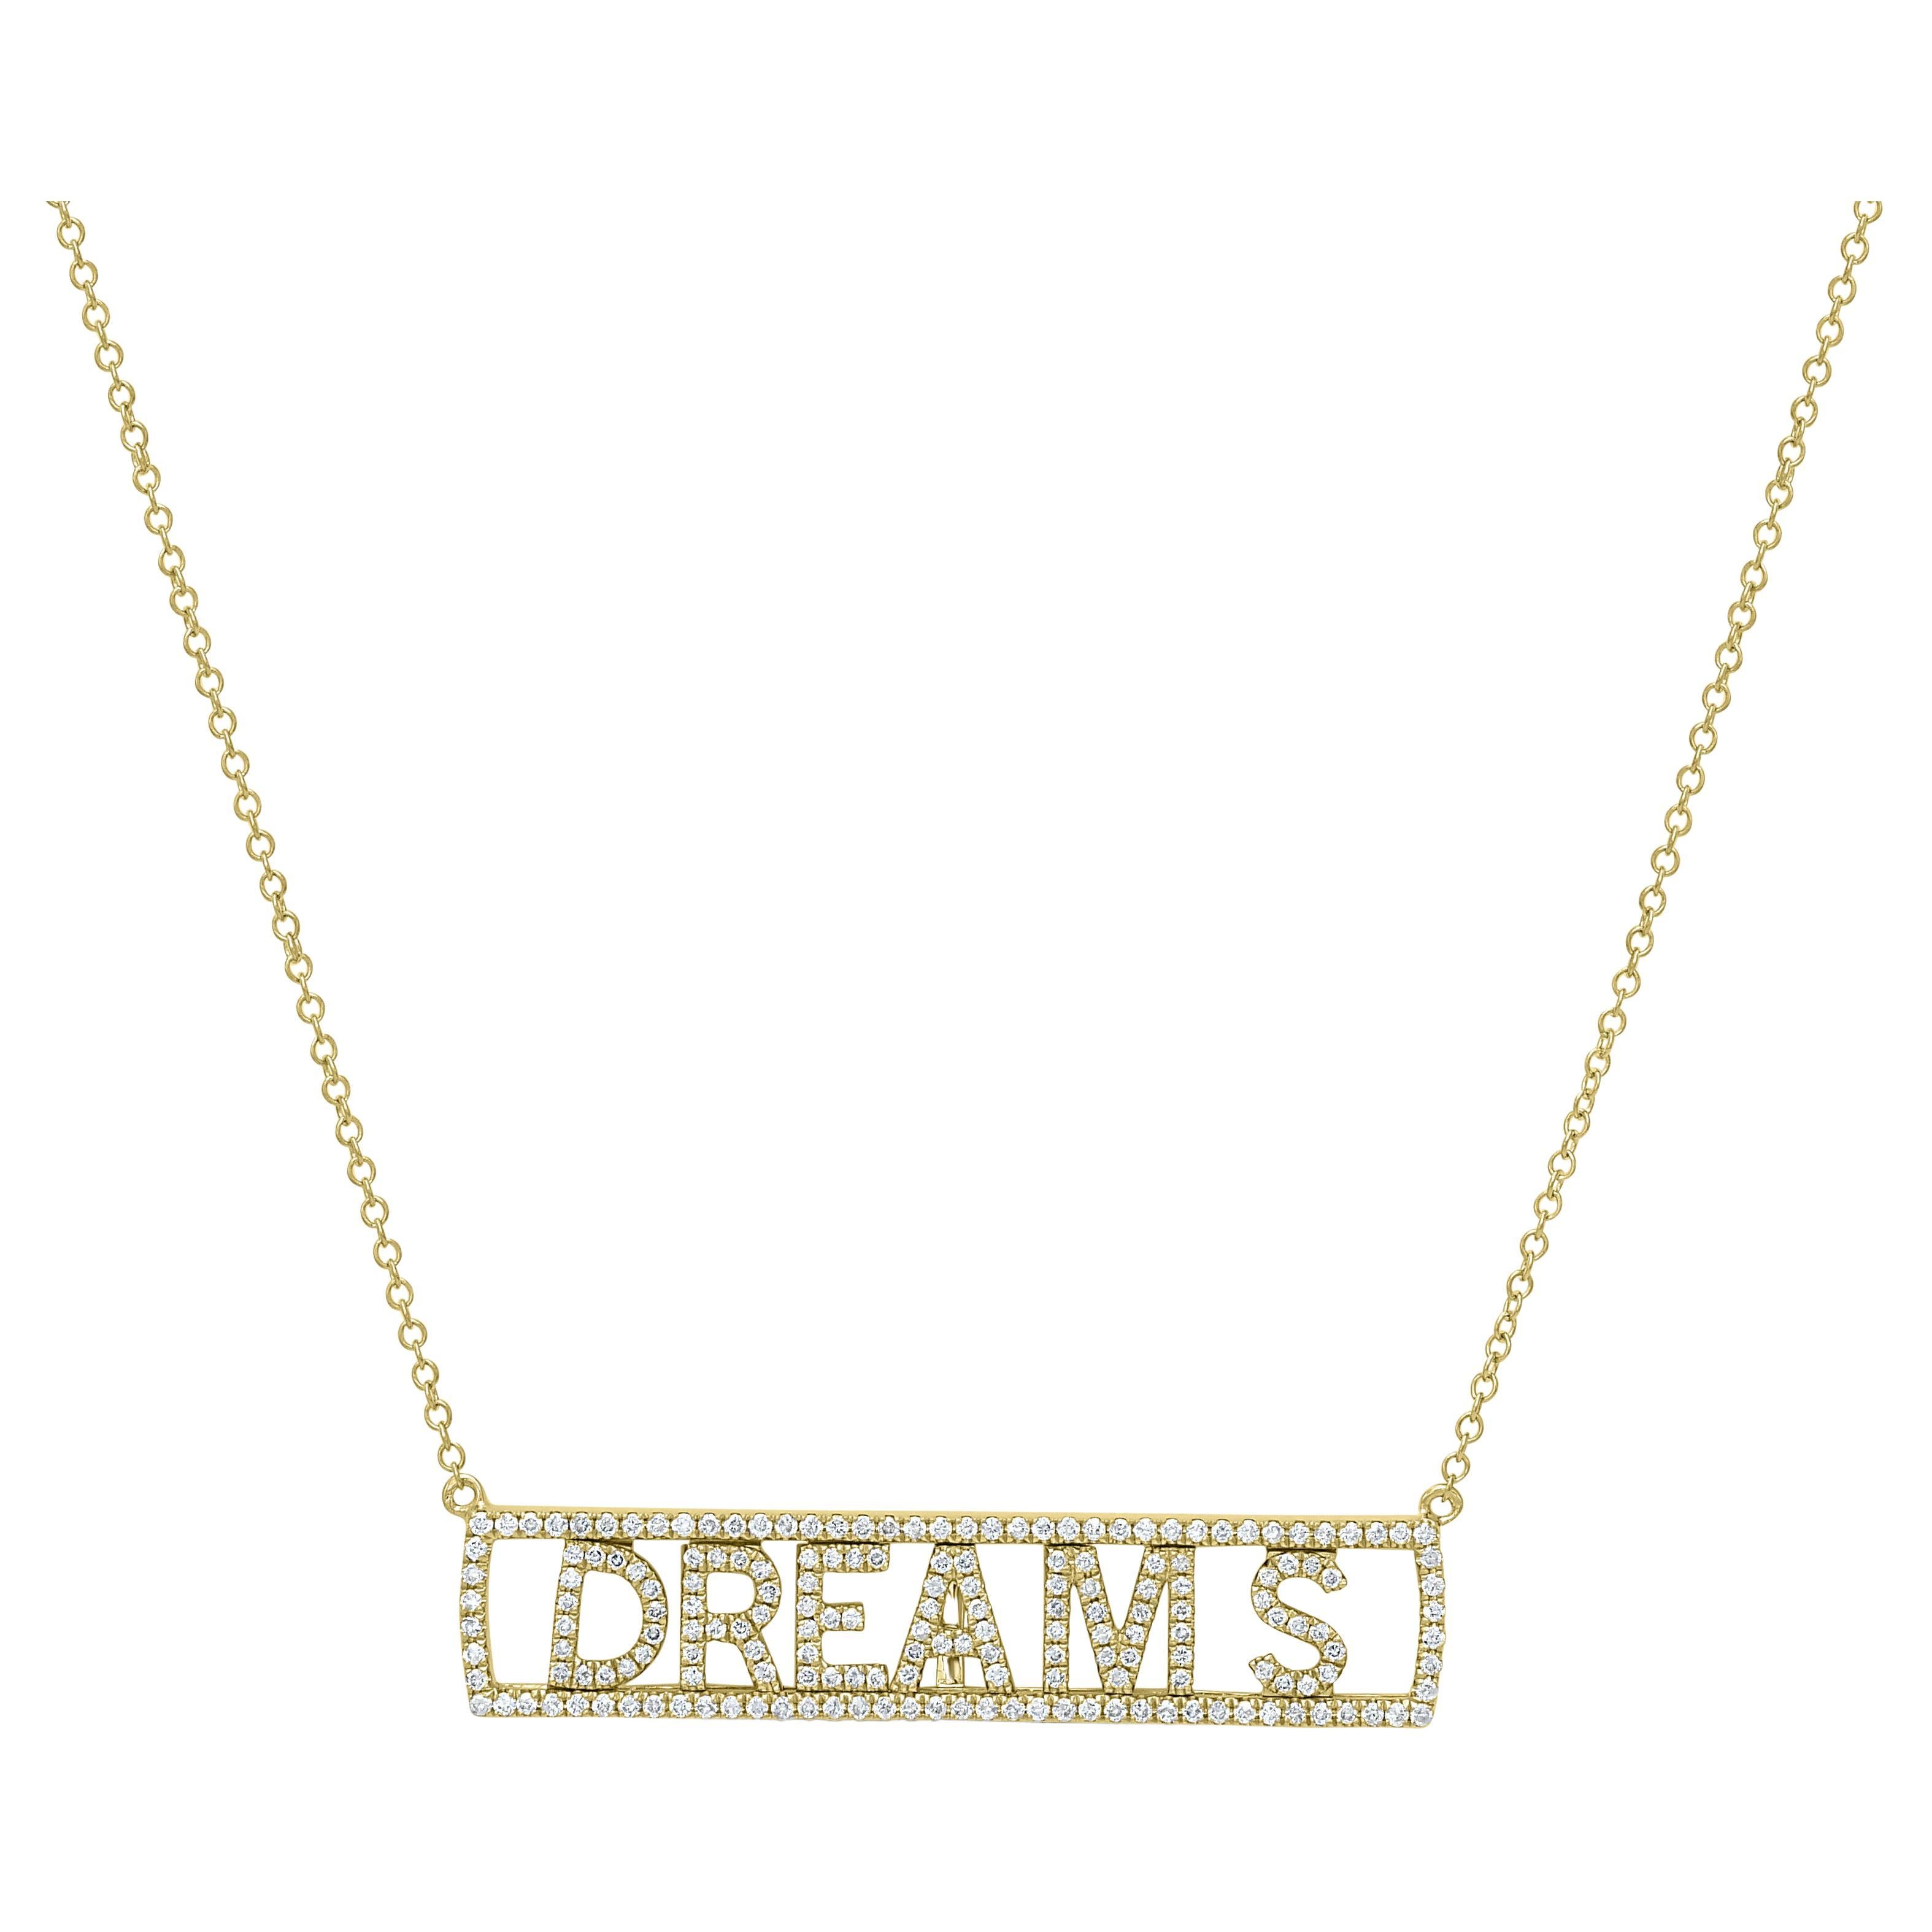 Luxle 1/2 Carat T.W. Diamond "Dreams" Necklace in 14k Gold For Sale